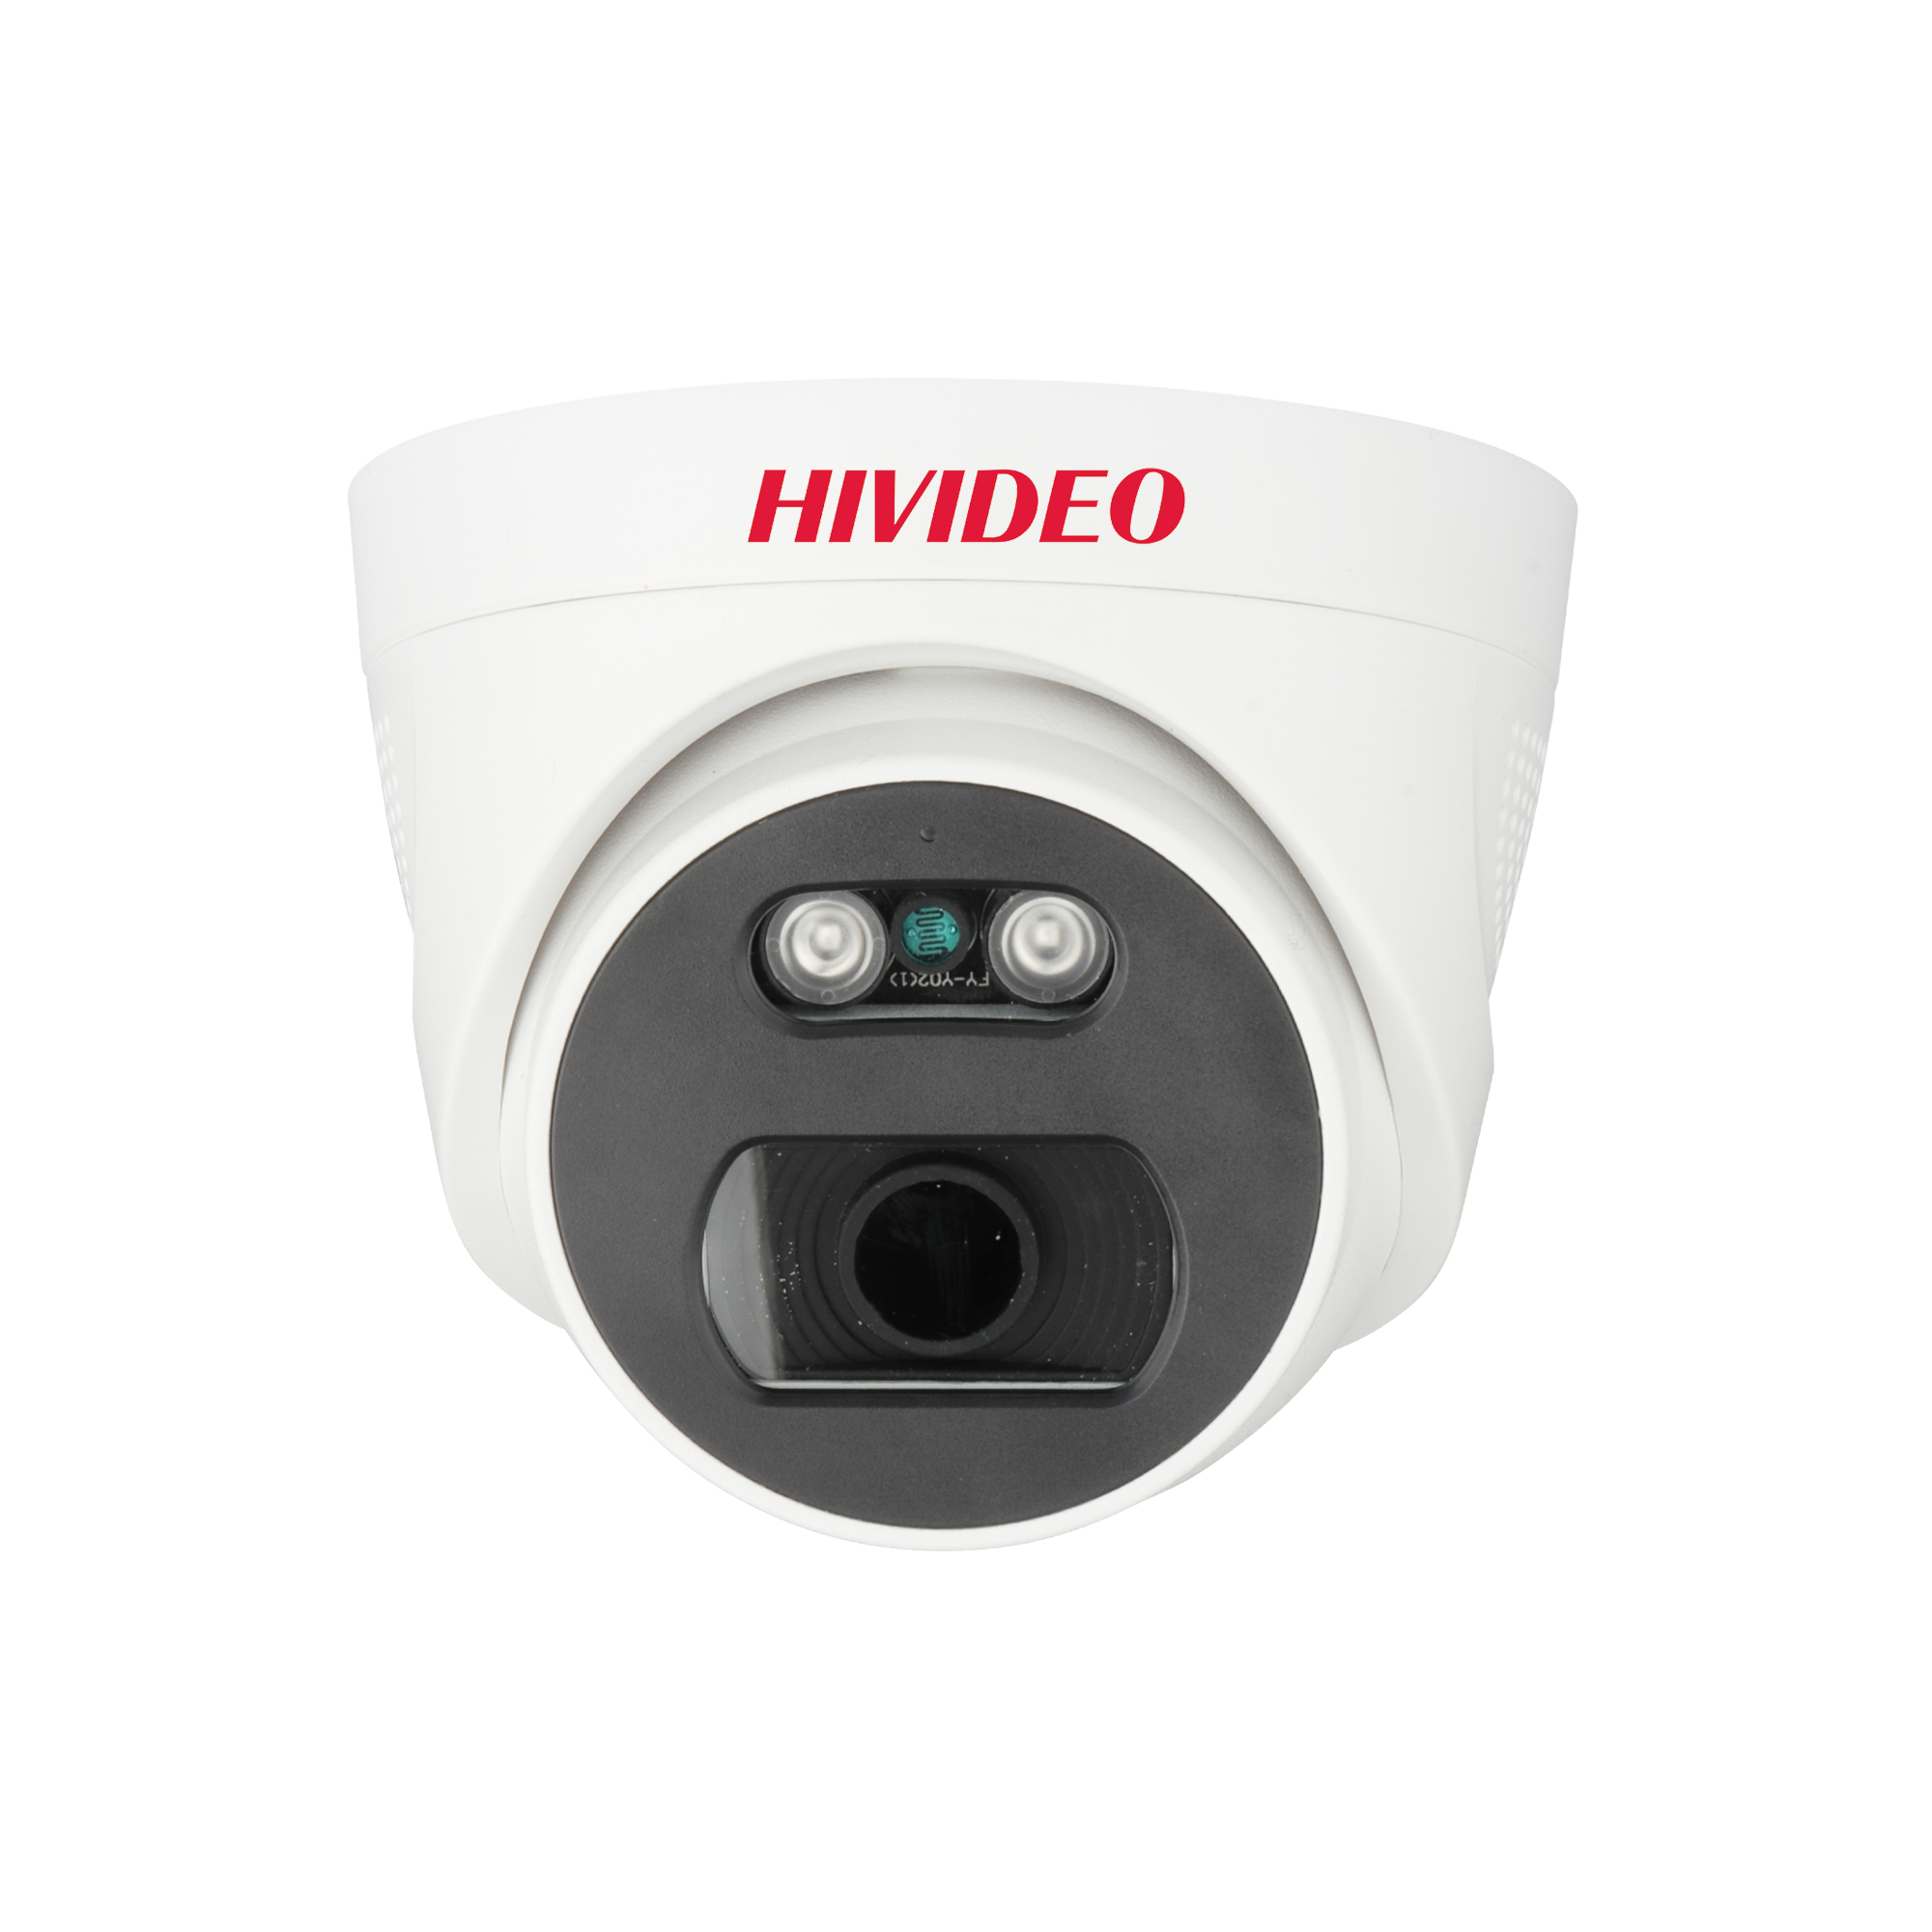 دوربین مداربسته دام HIVIDEO مدل HI-D73614